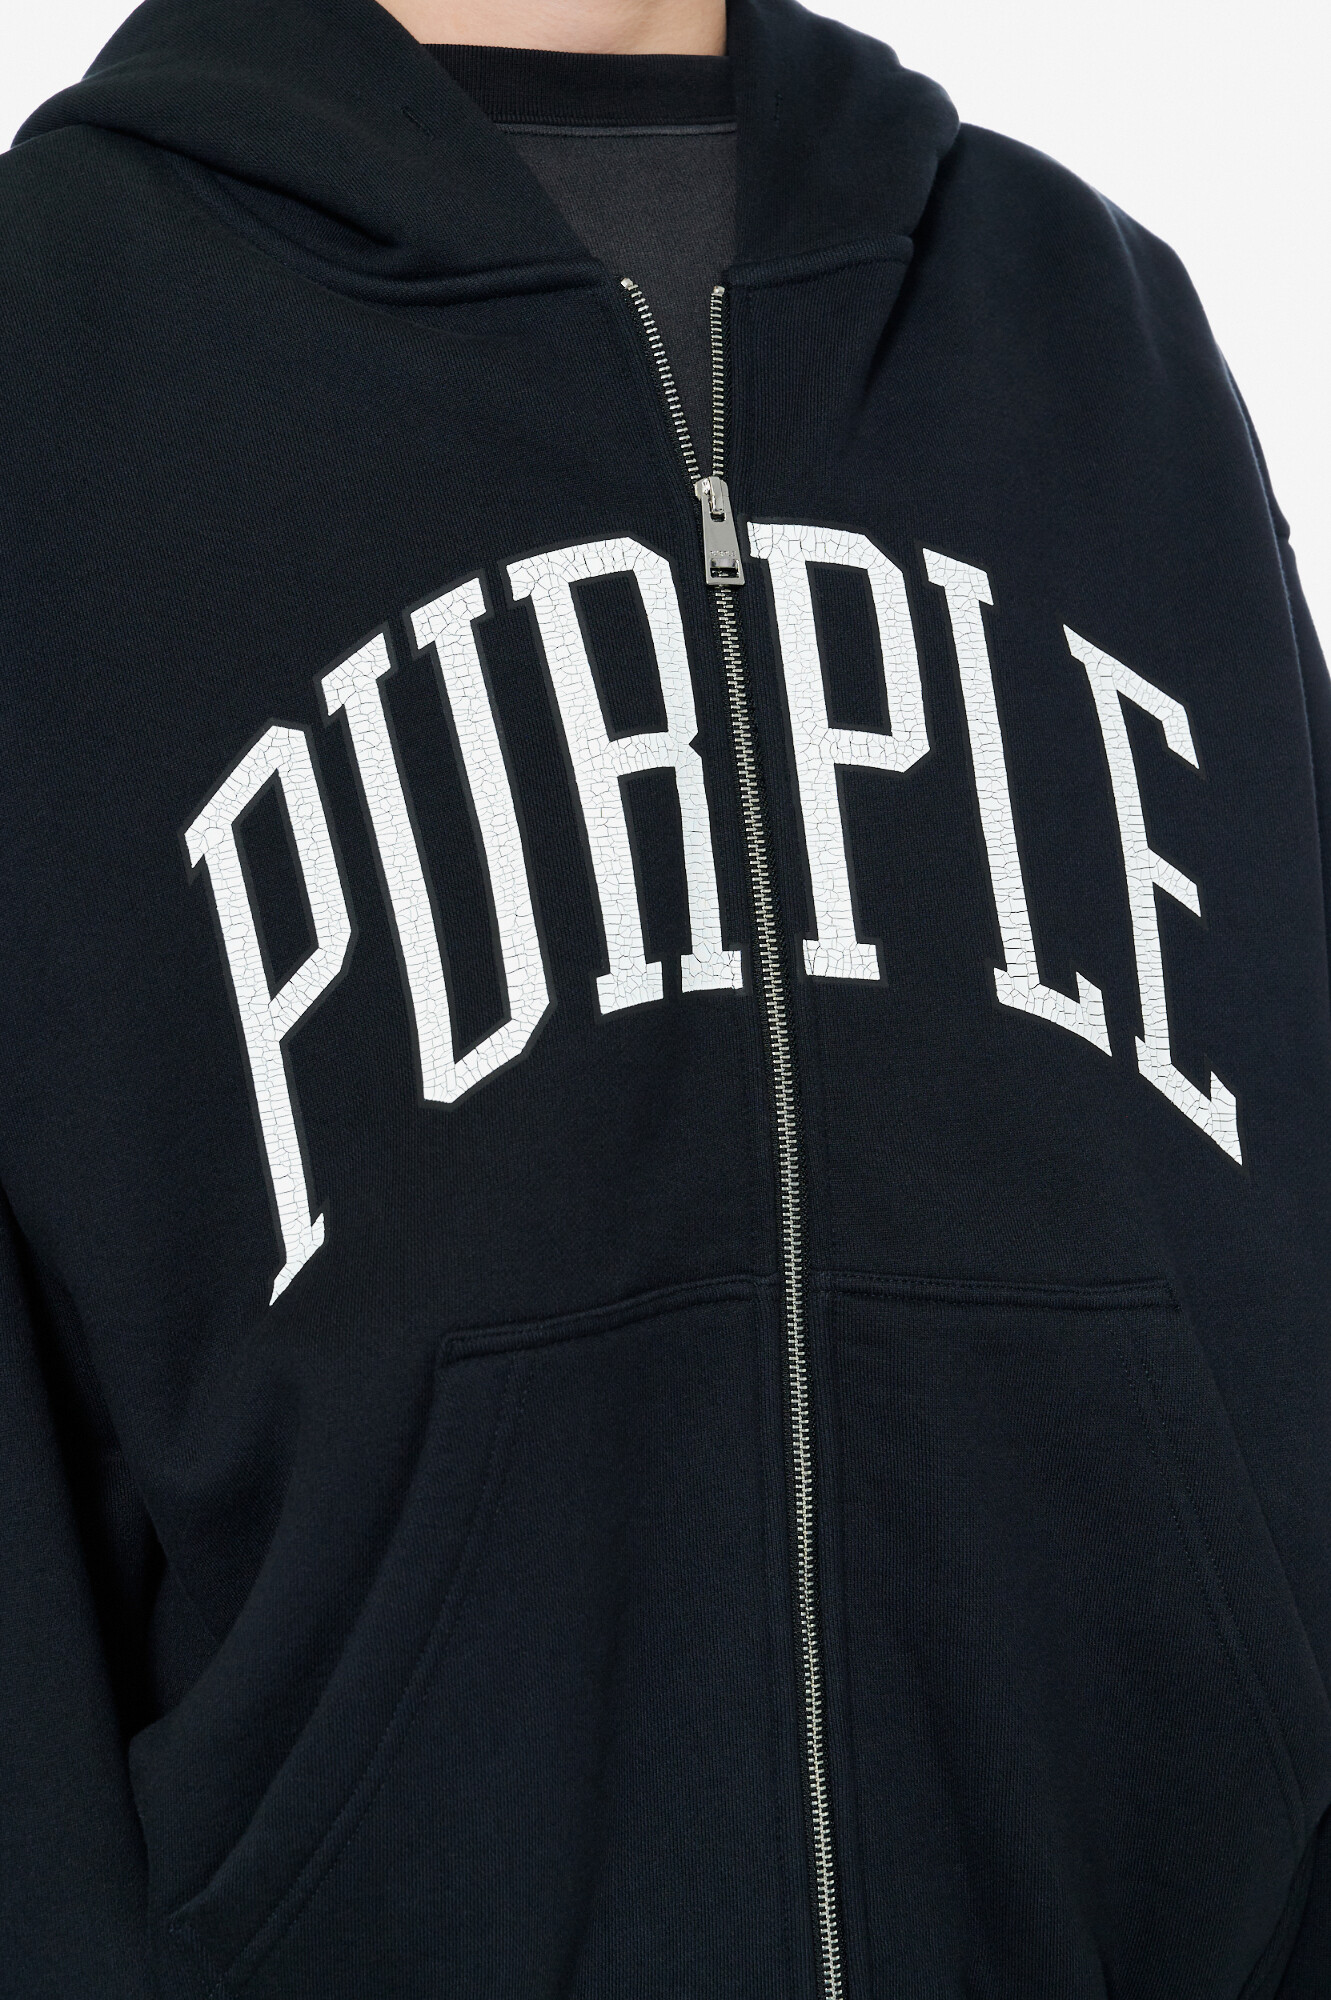 Purple Brand Худи 